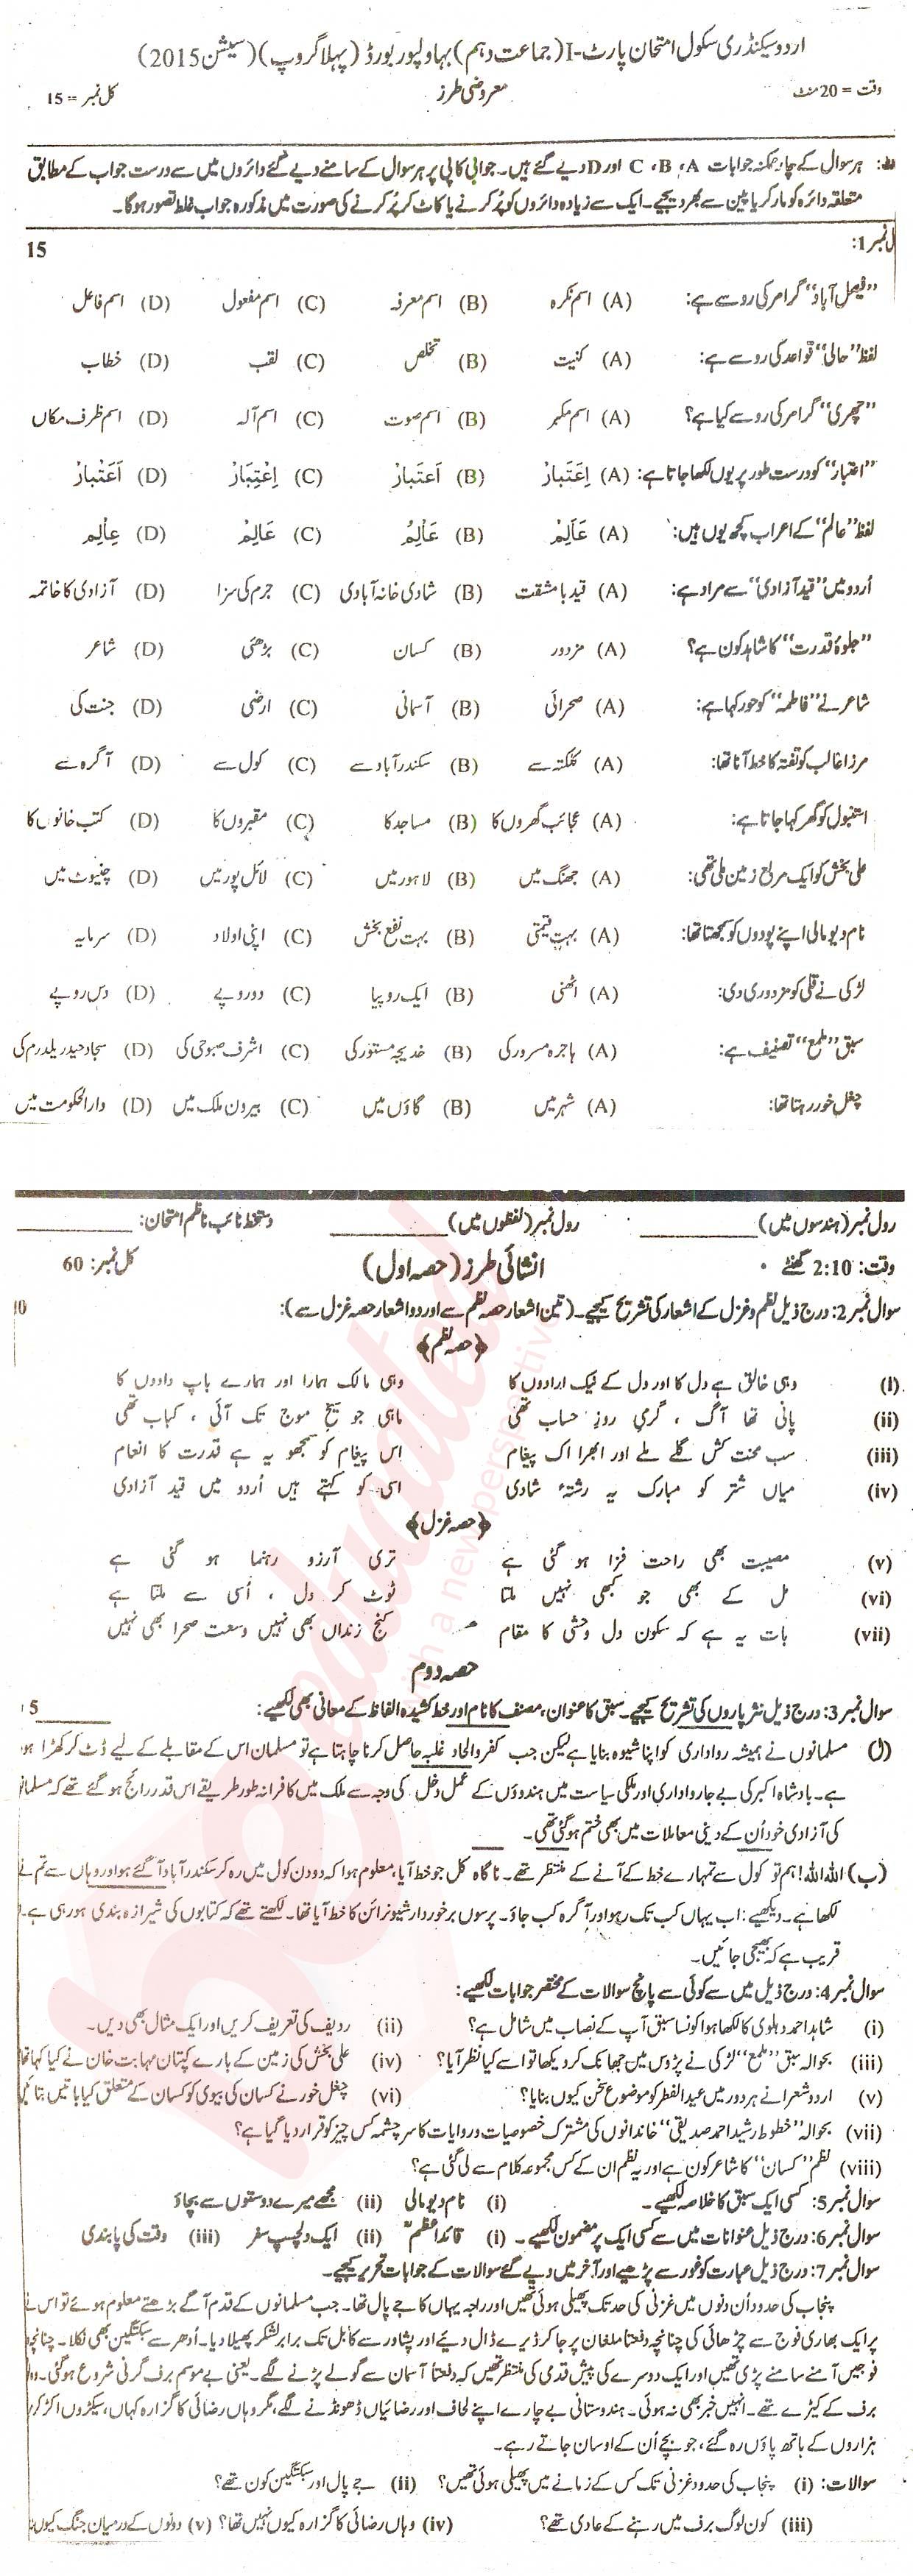 Urdu 10th class Past Paper Group 1 BISE Bahawalpur 2015